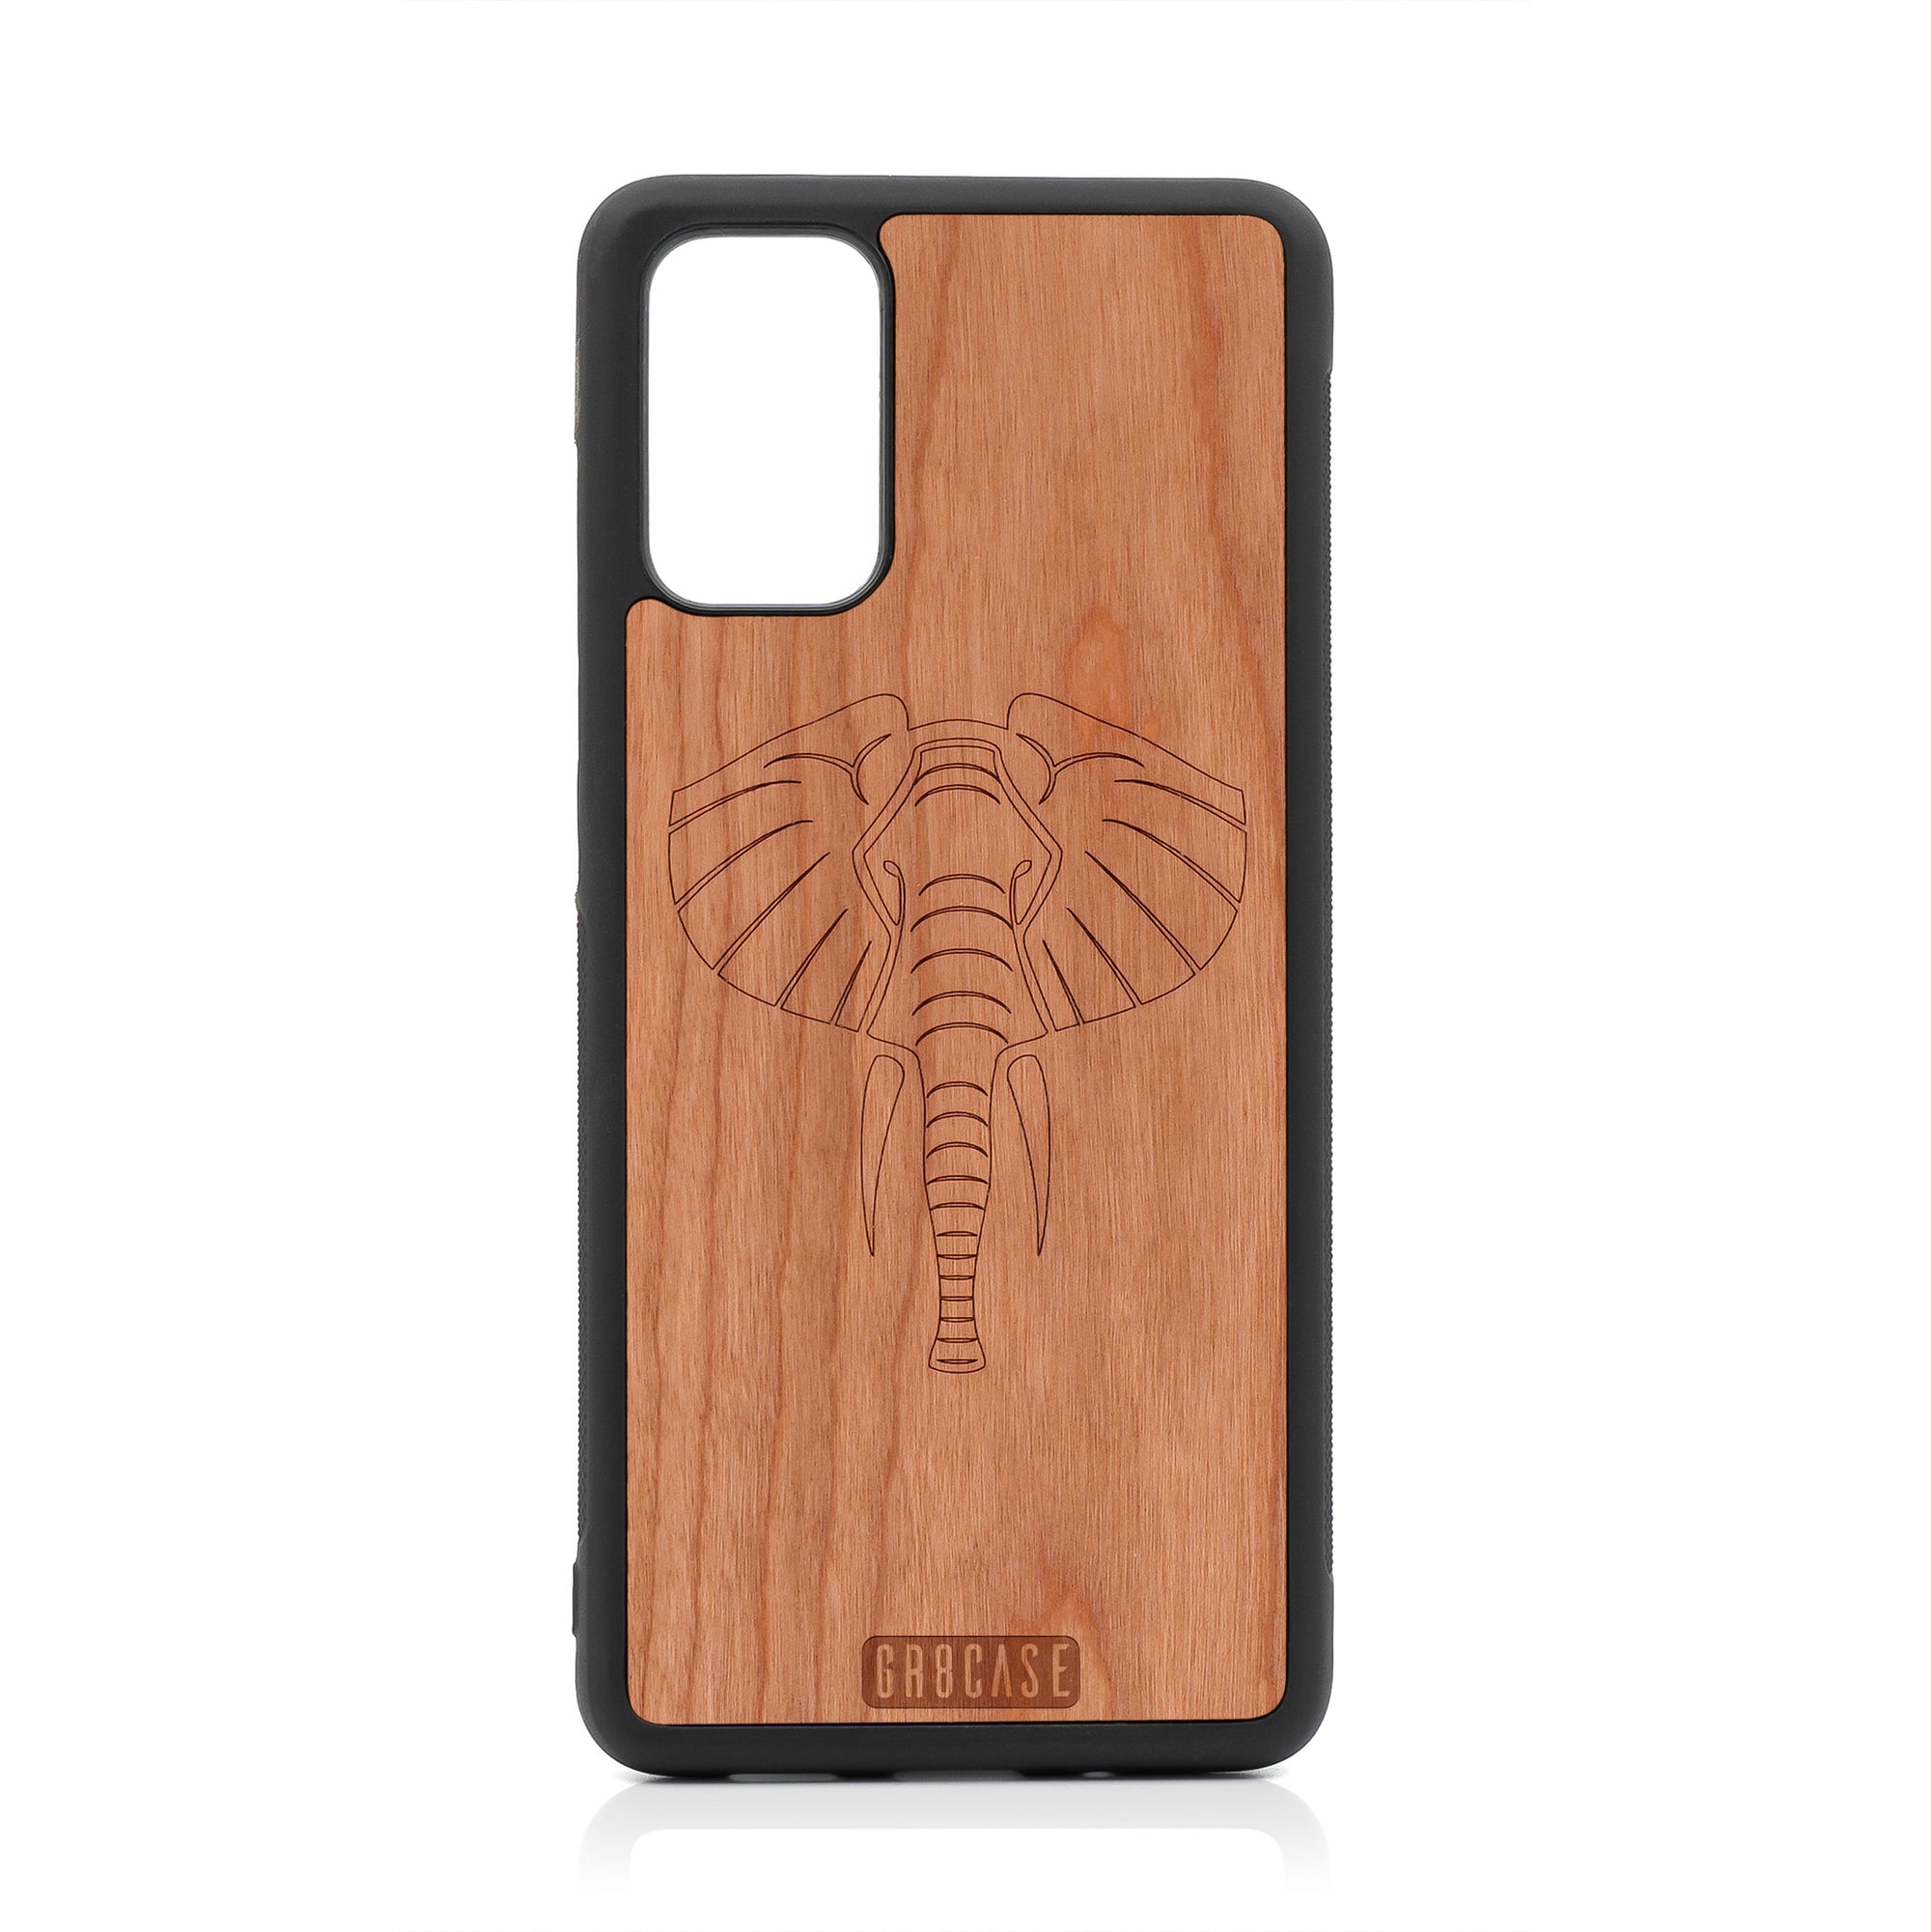 Elaphant Design Wood Case For Samsung Galaxy S20 Plus by GR8CASE